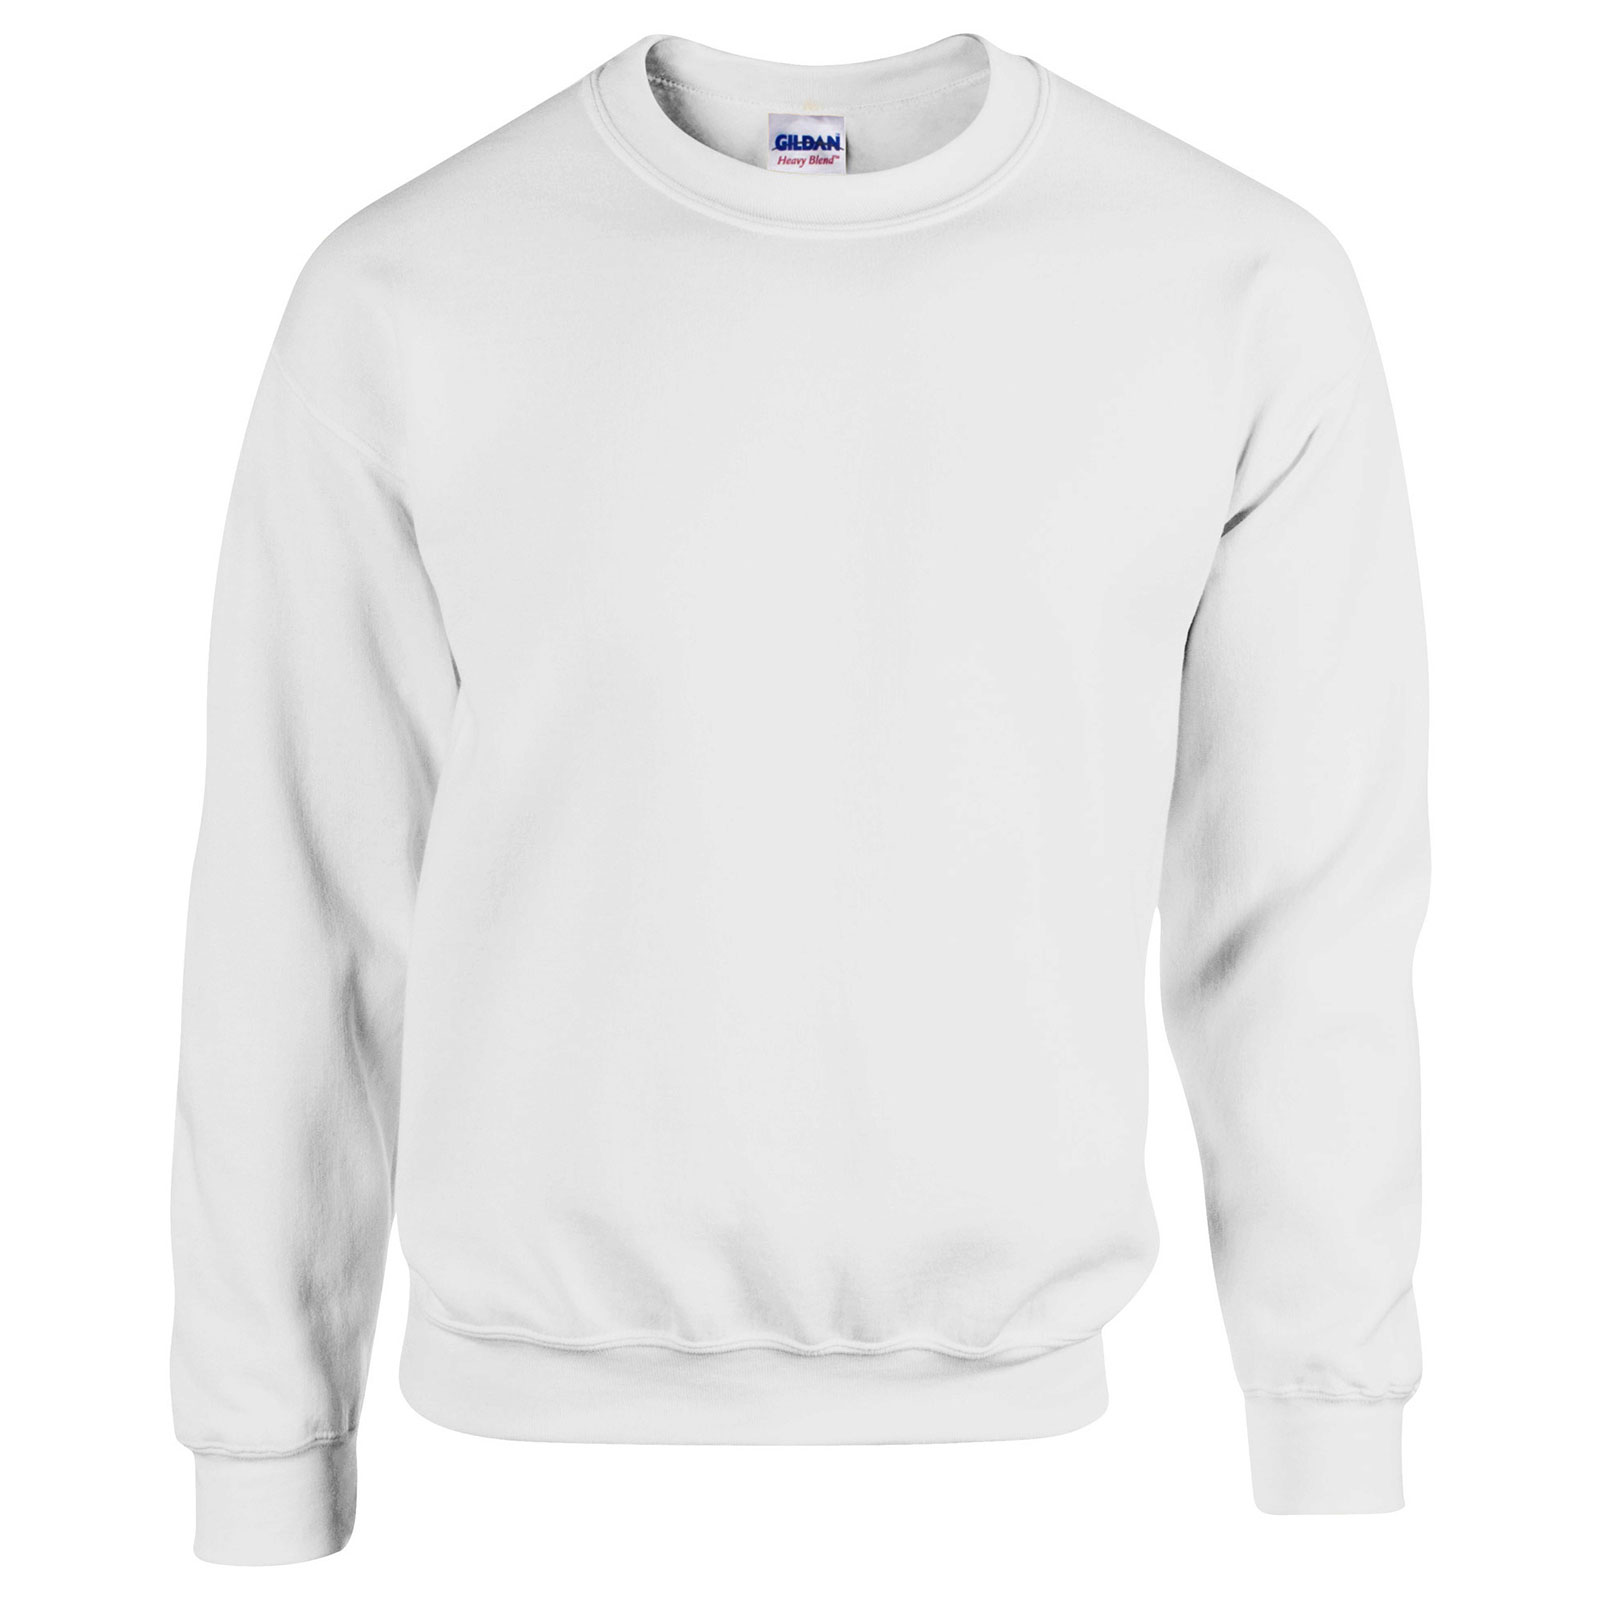 Blank White Sweatshirt - Basic tees shop